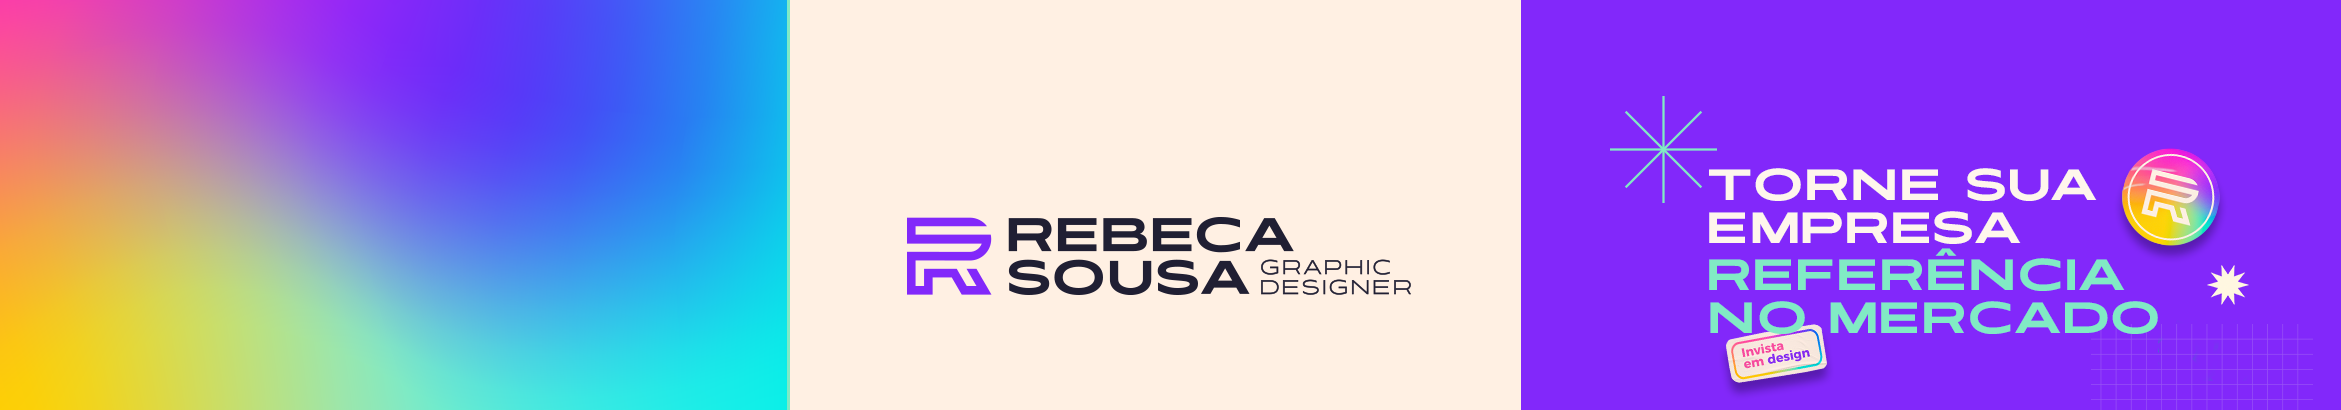 Rebeca Sousa のプロファイルバナー